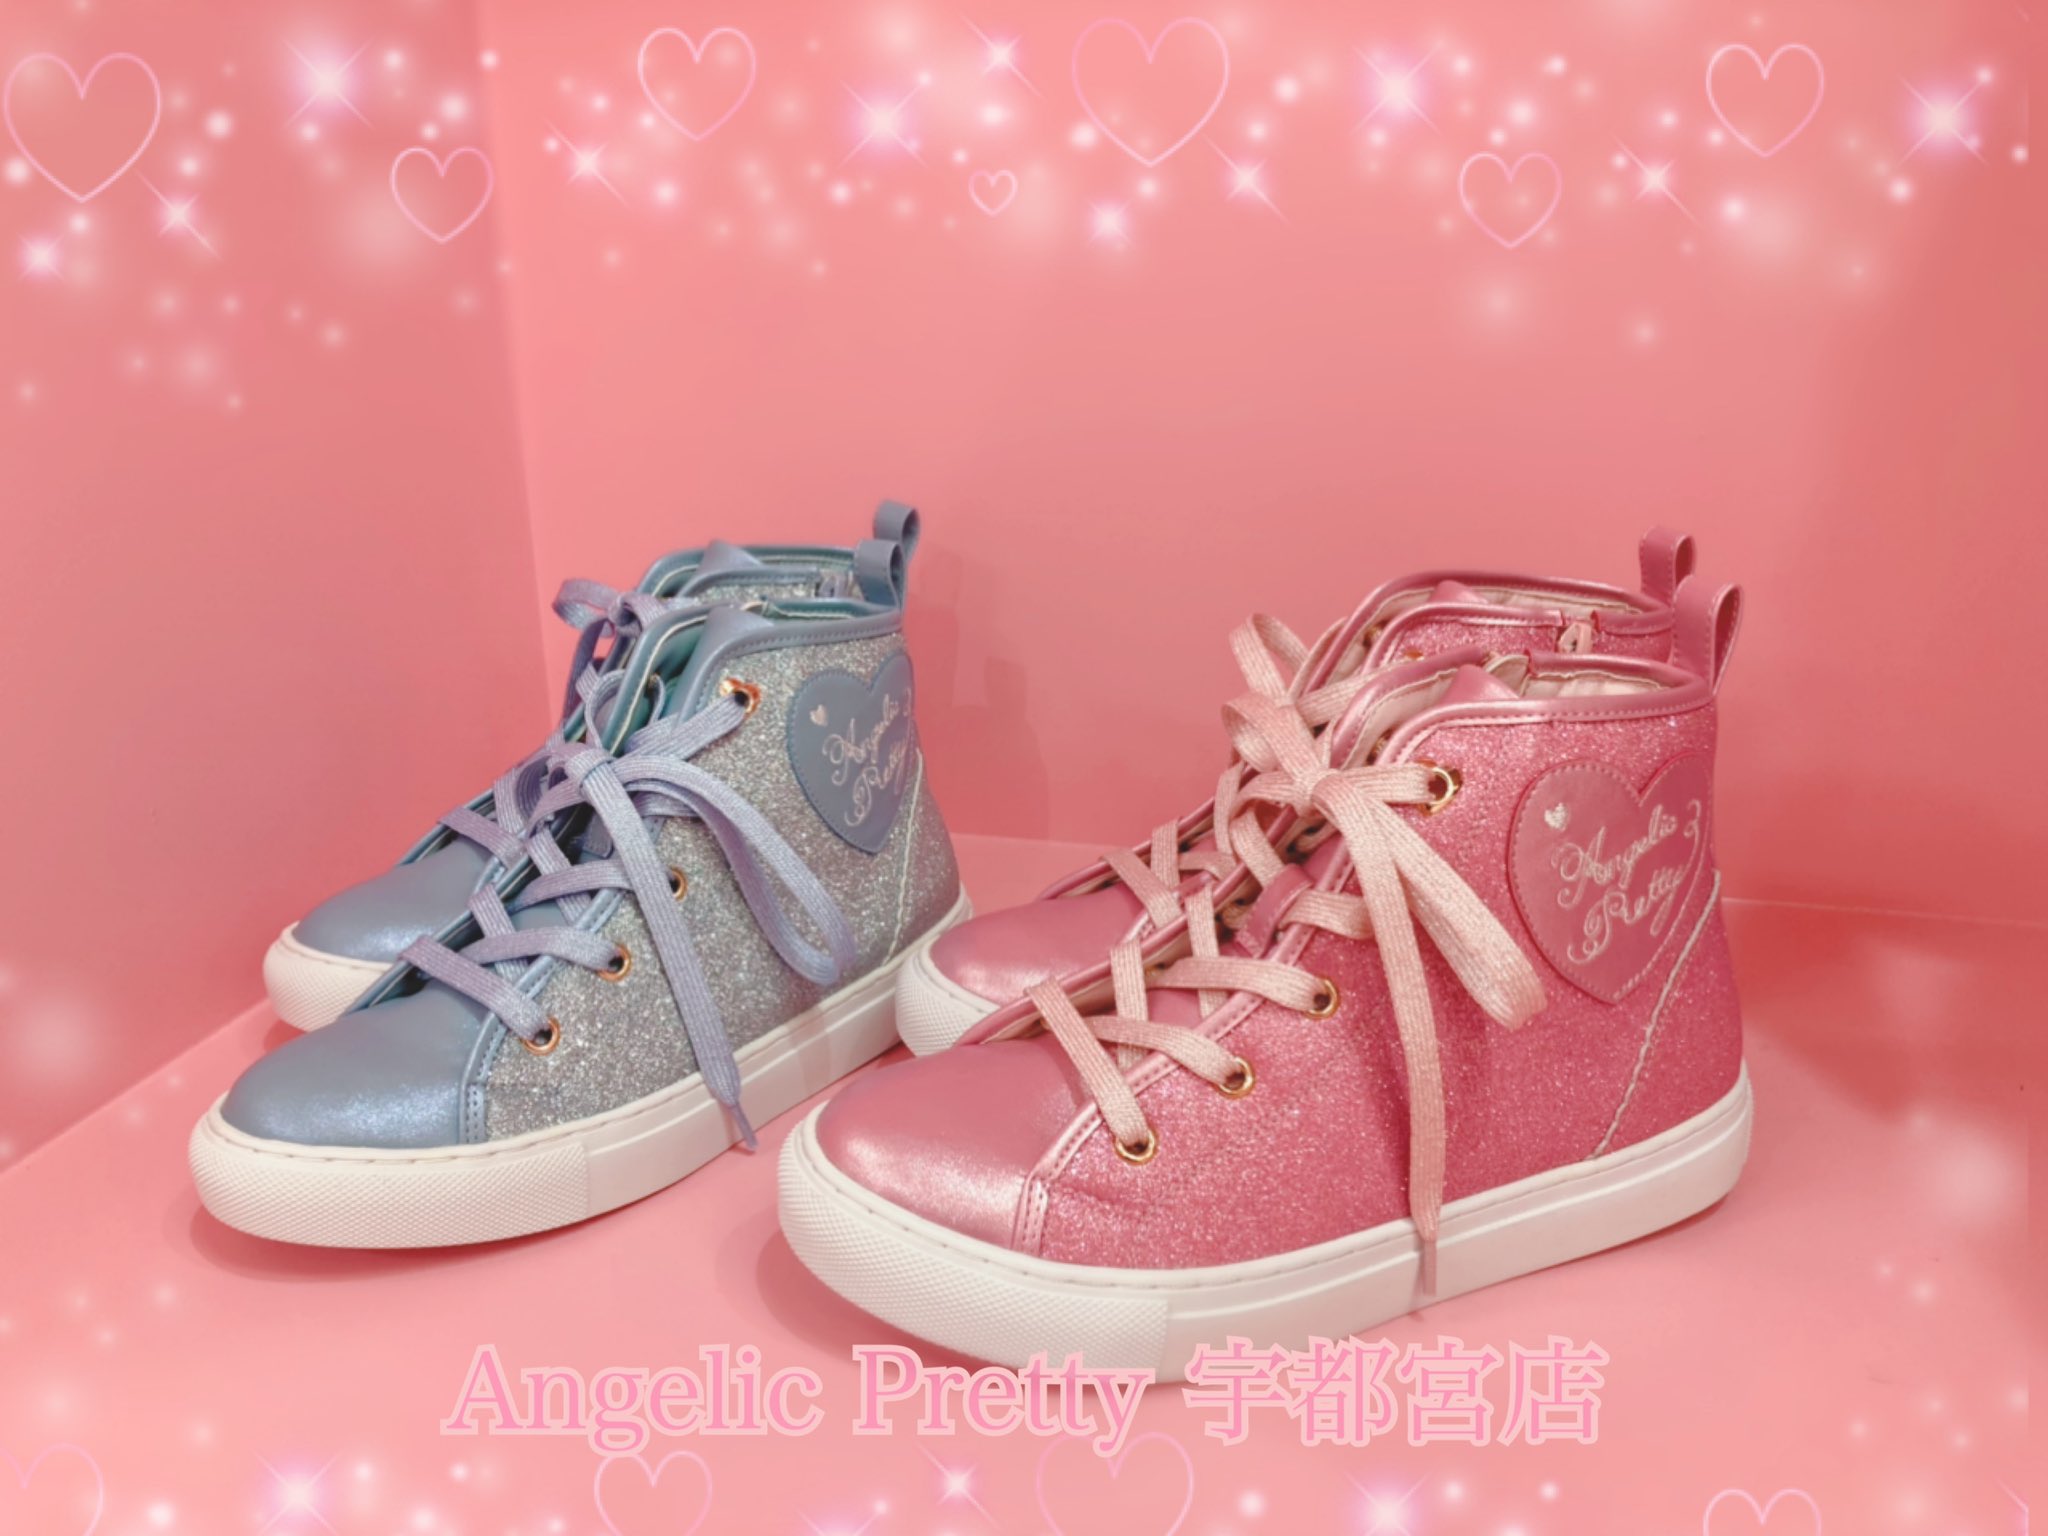 Angelic Pretty宇都宮店 on X: 